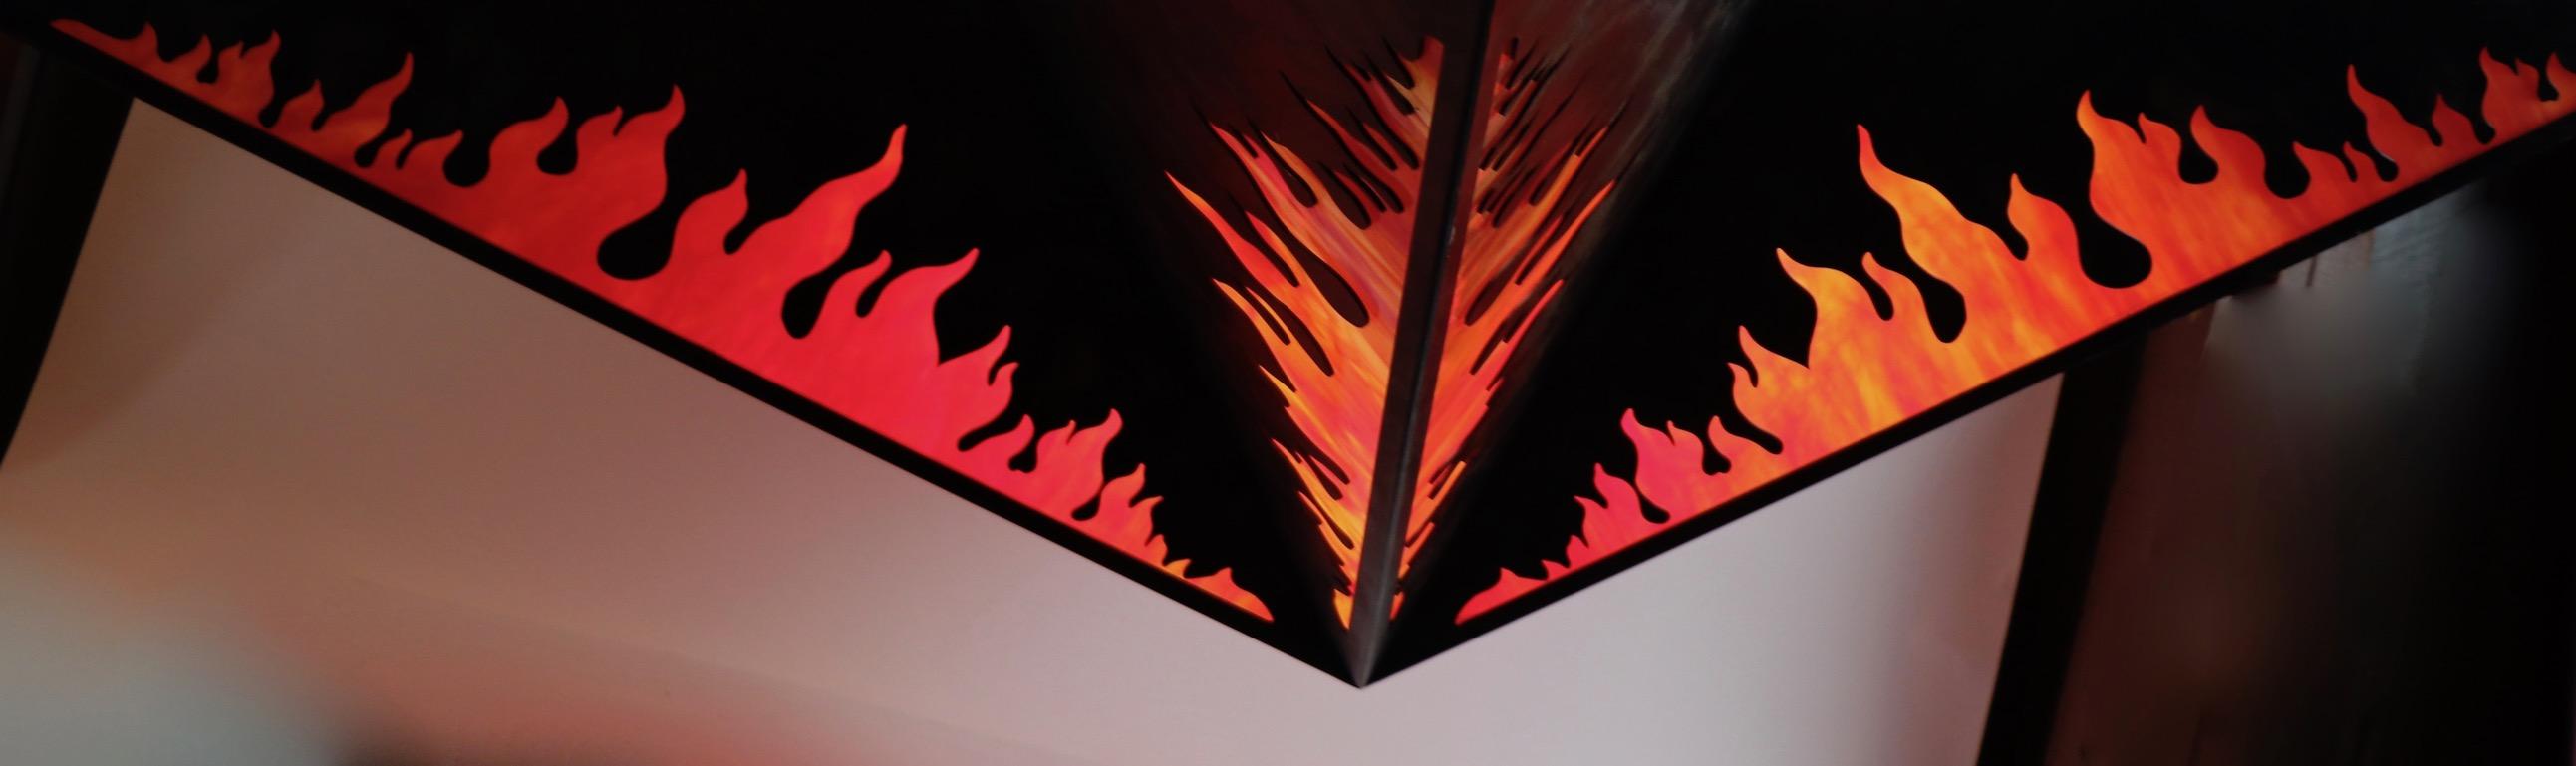 American Star Form Flame Motif Slag Glass Chandelier For Sale